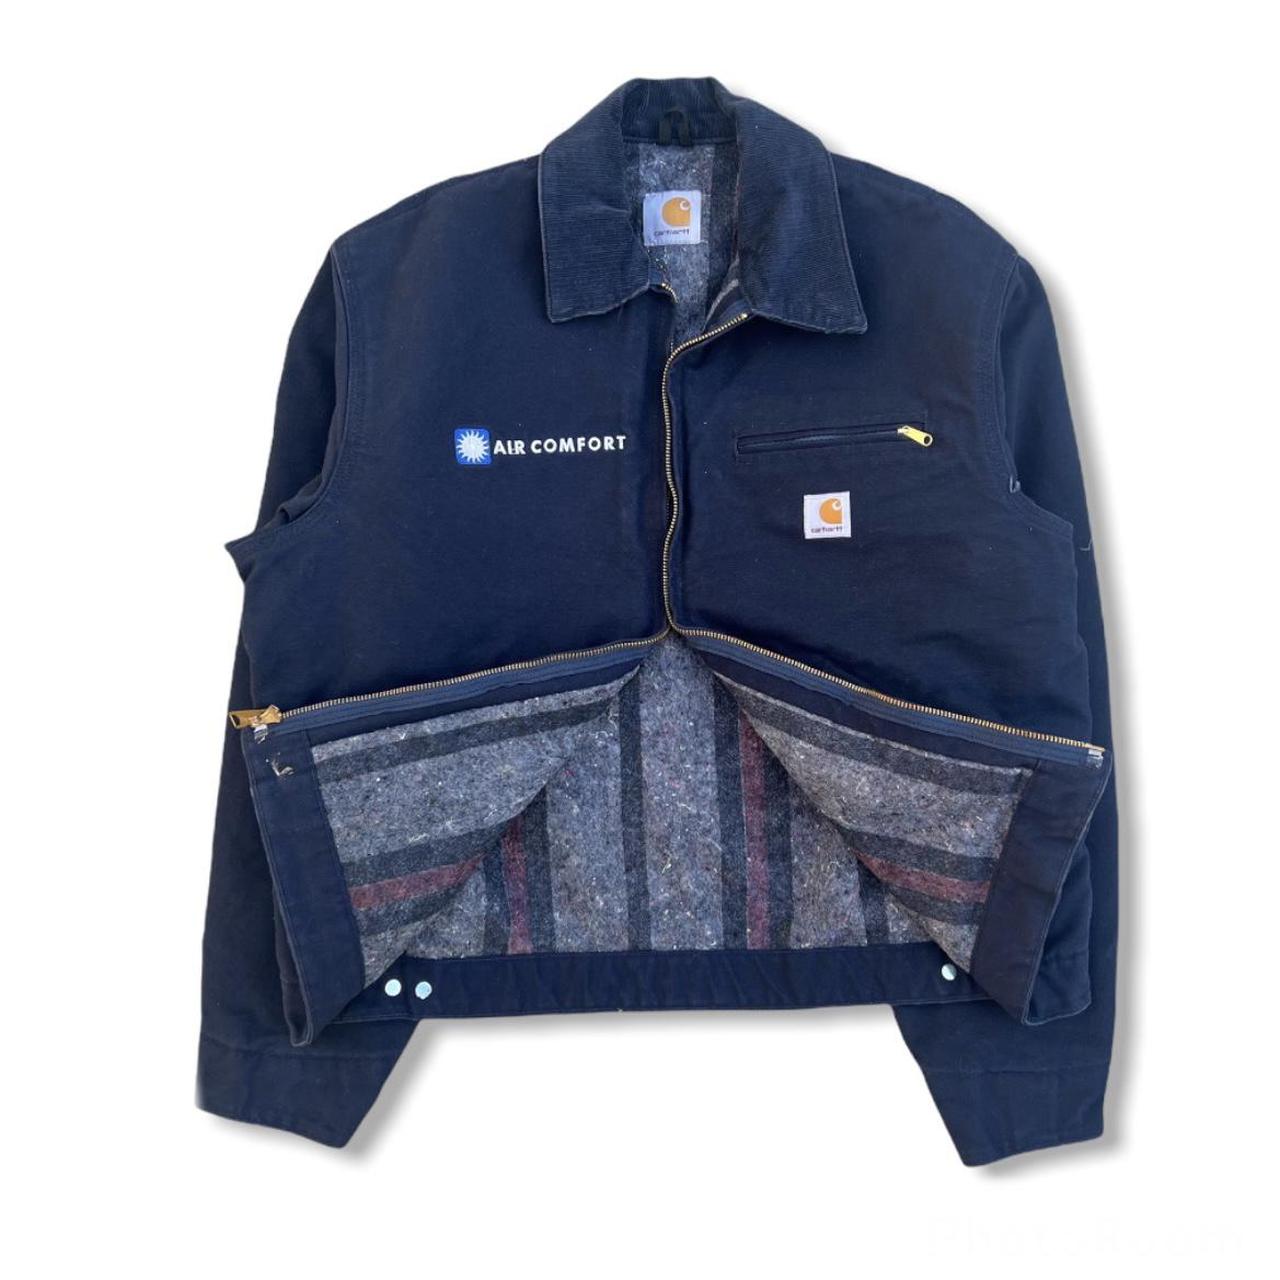 Product Image 2 - Vintage Carhartt Jacket
• Blanket Lined,